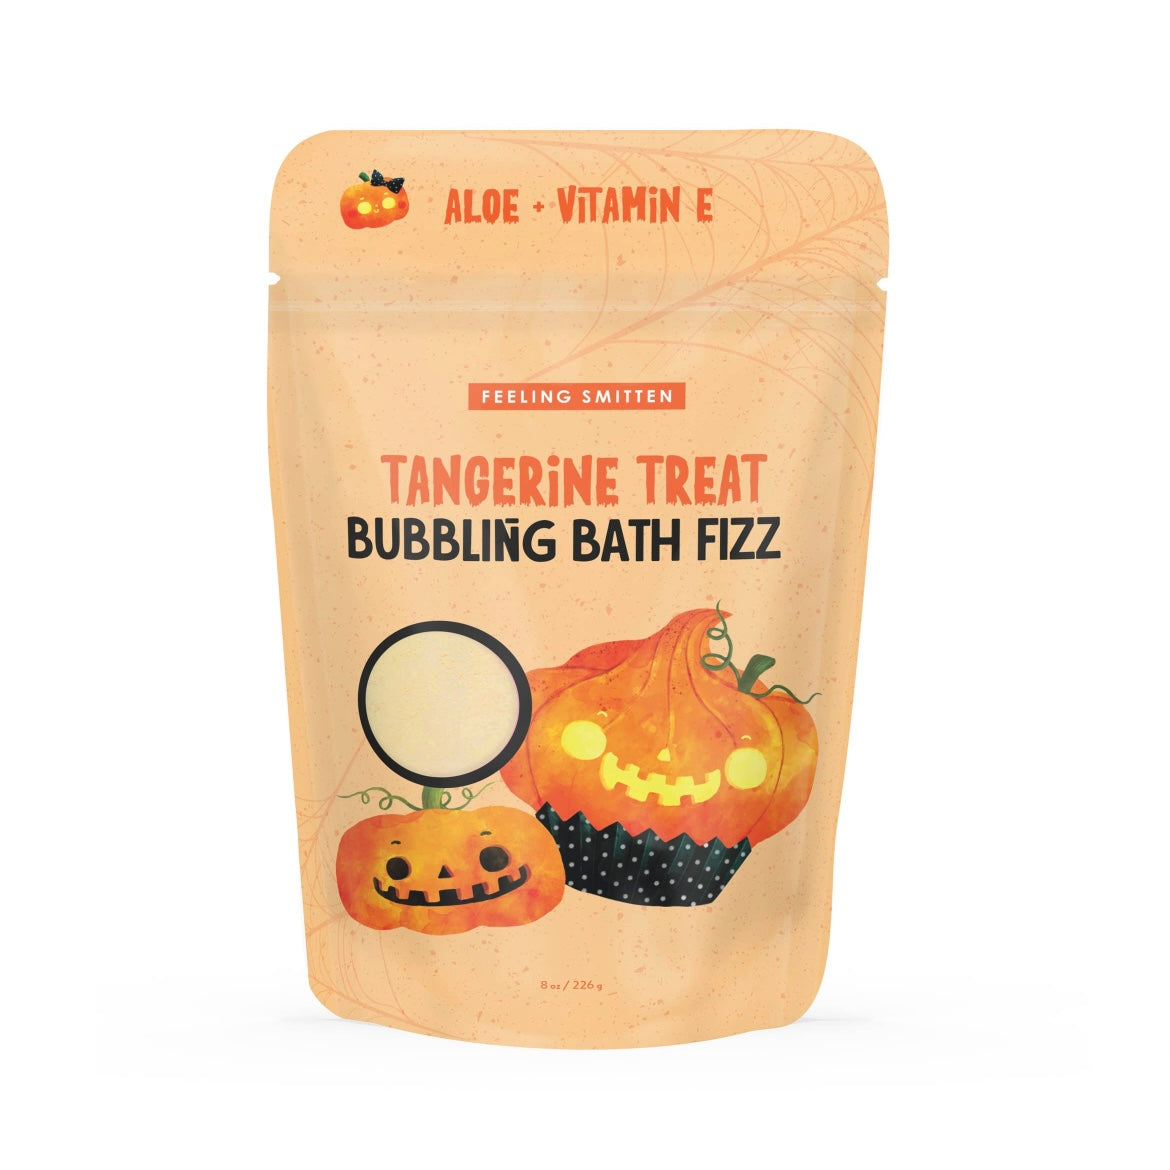 Bubbling Bath Fizz